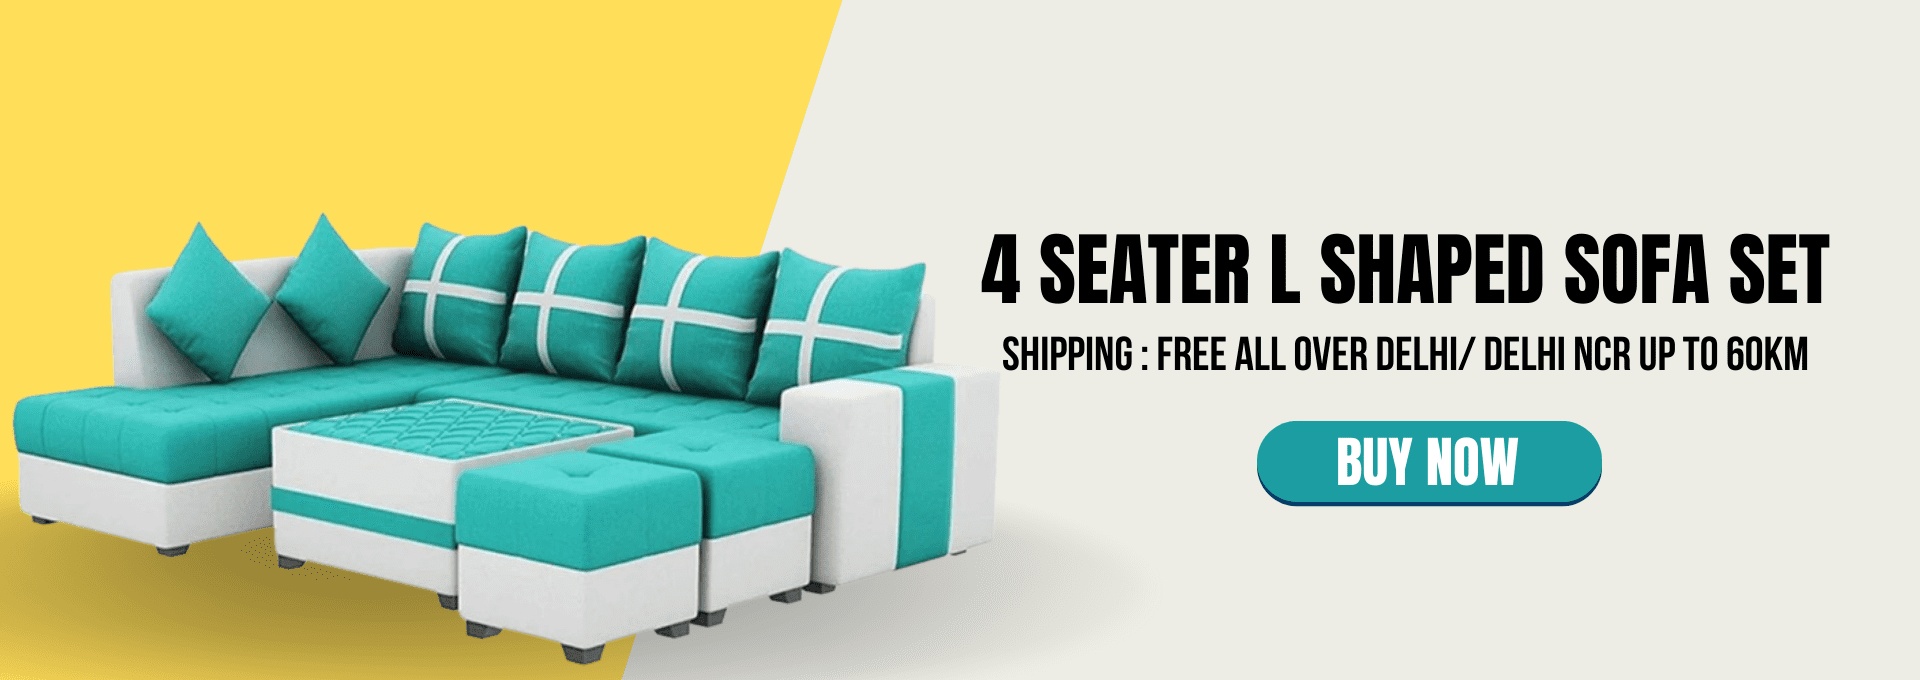 4 Seater L Shaped Sofa Set